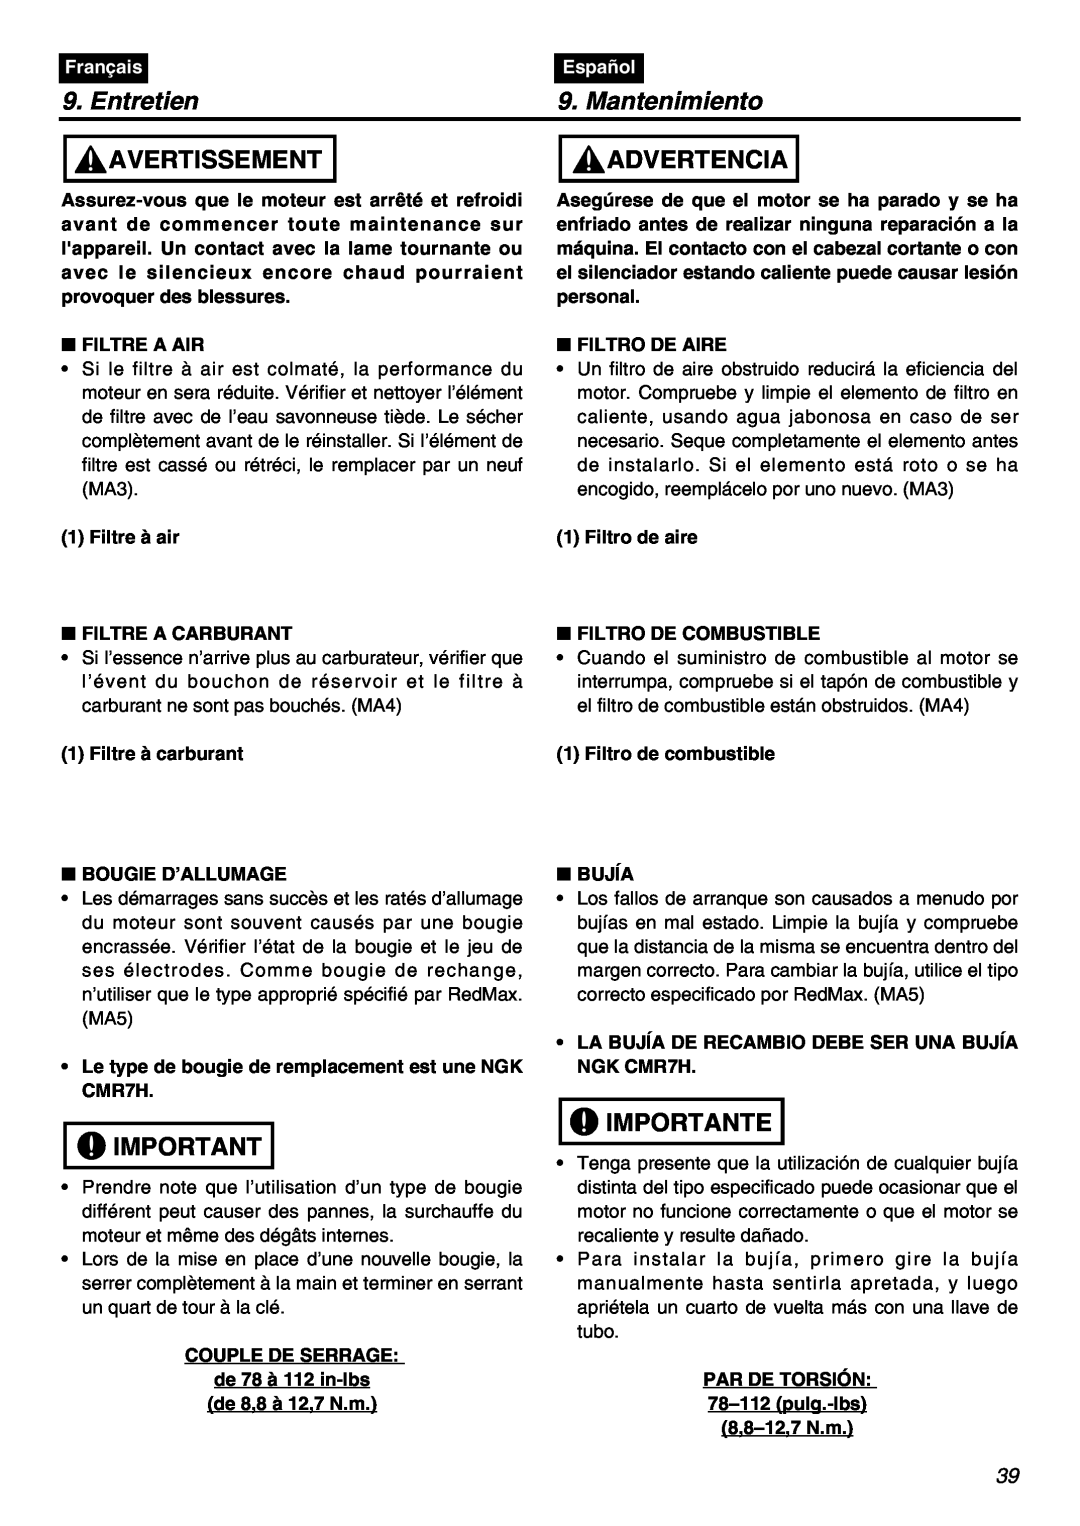 Univex SRTZ2401-CA manual Entretien, Mantenimiento, Avertissement, Advertencia, Importante, Français, Español 